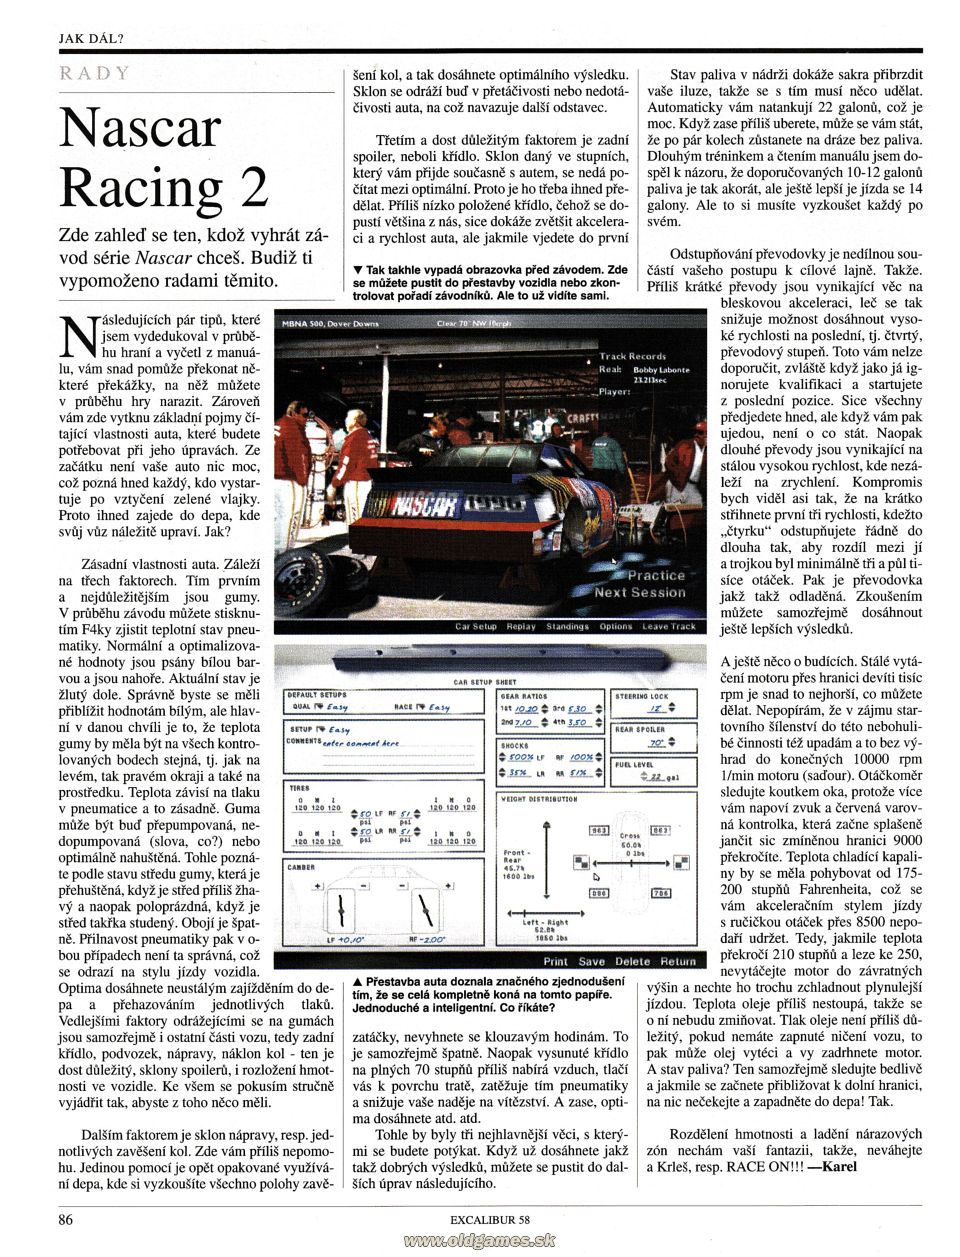 Rady: Nascar Racing